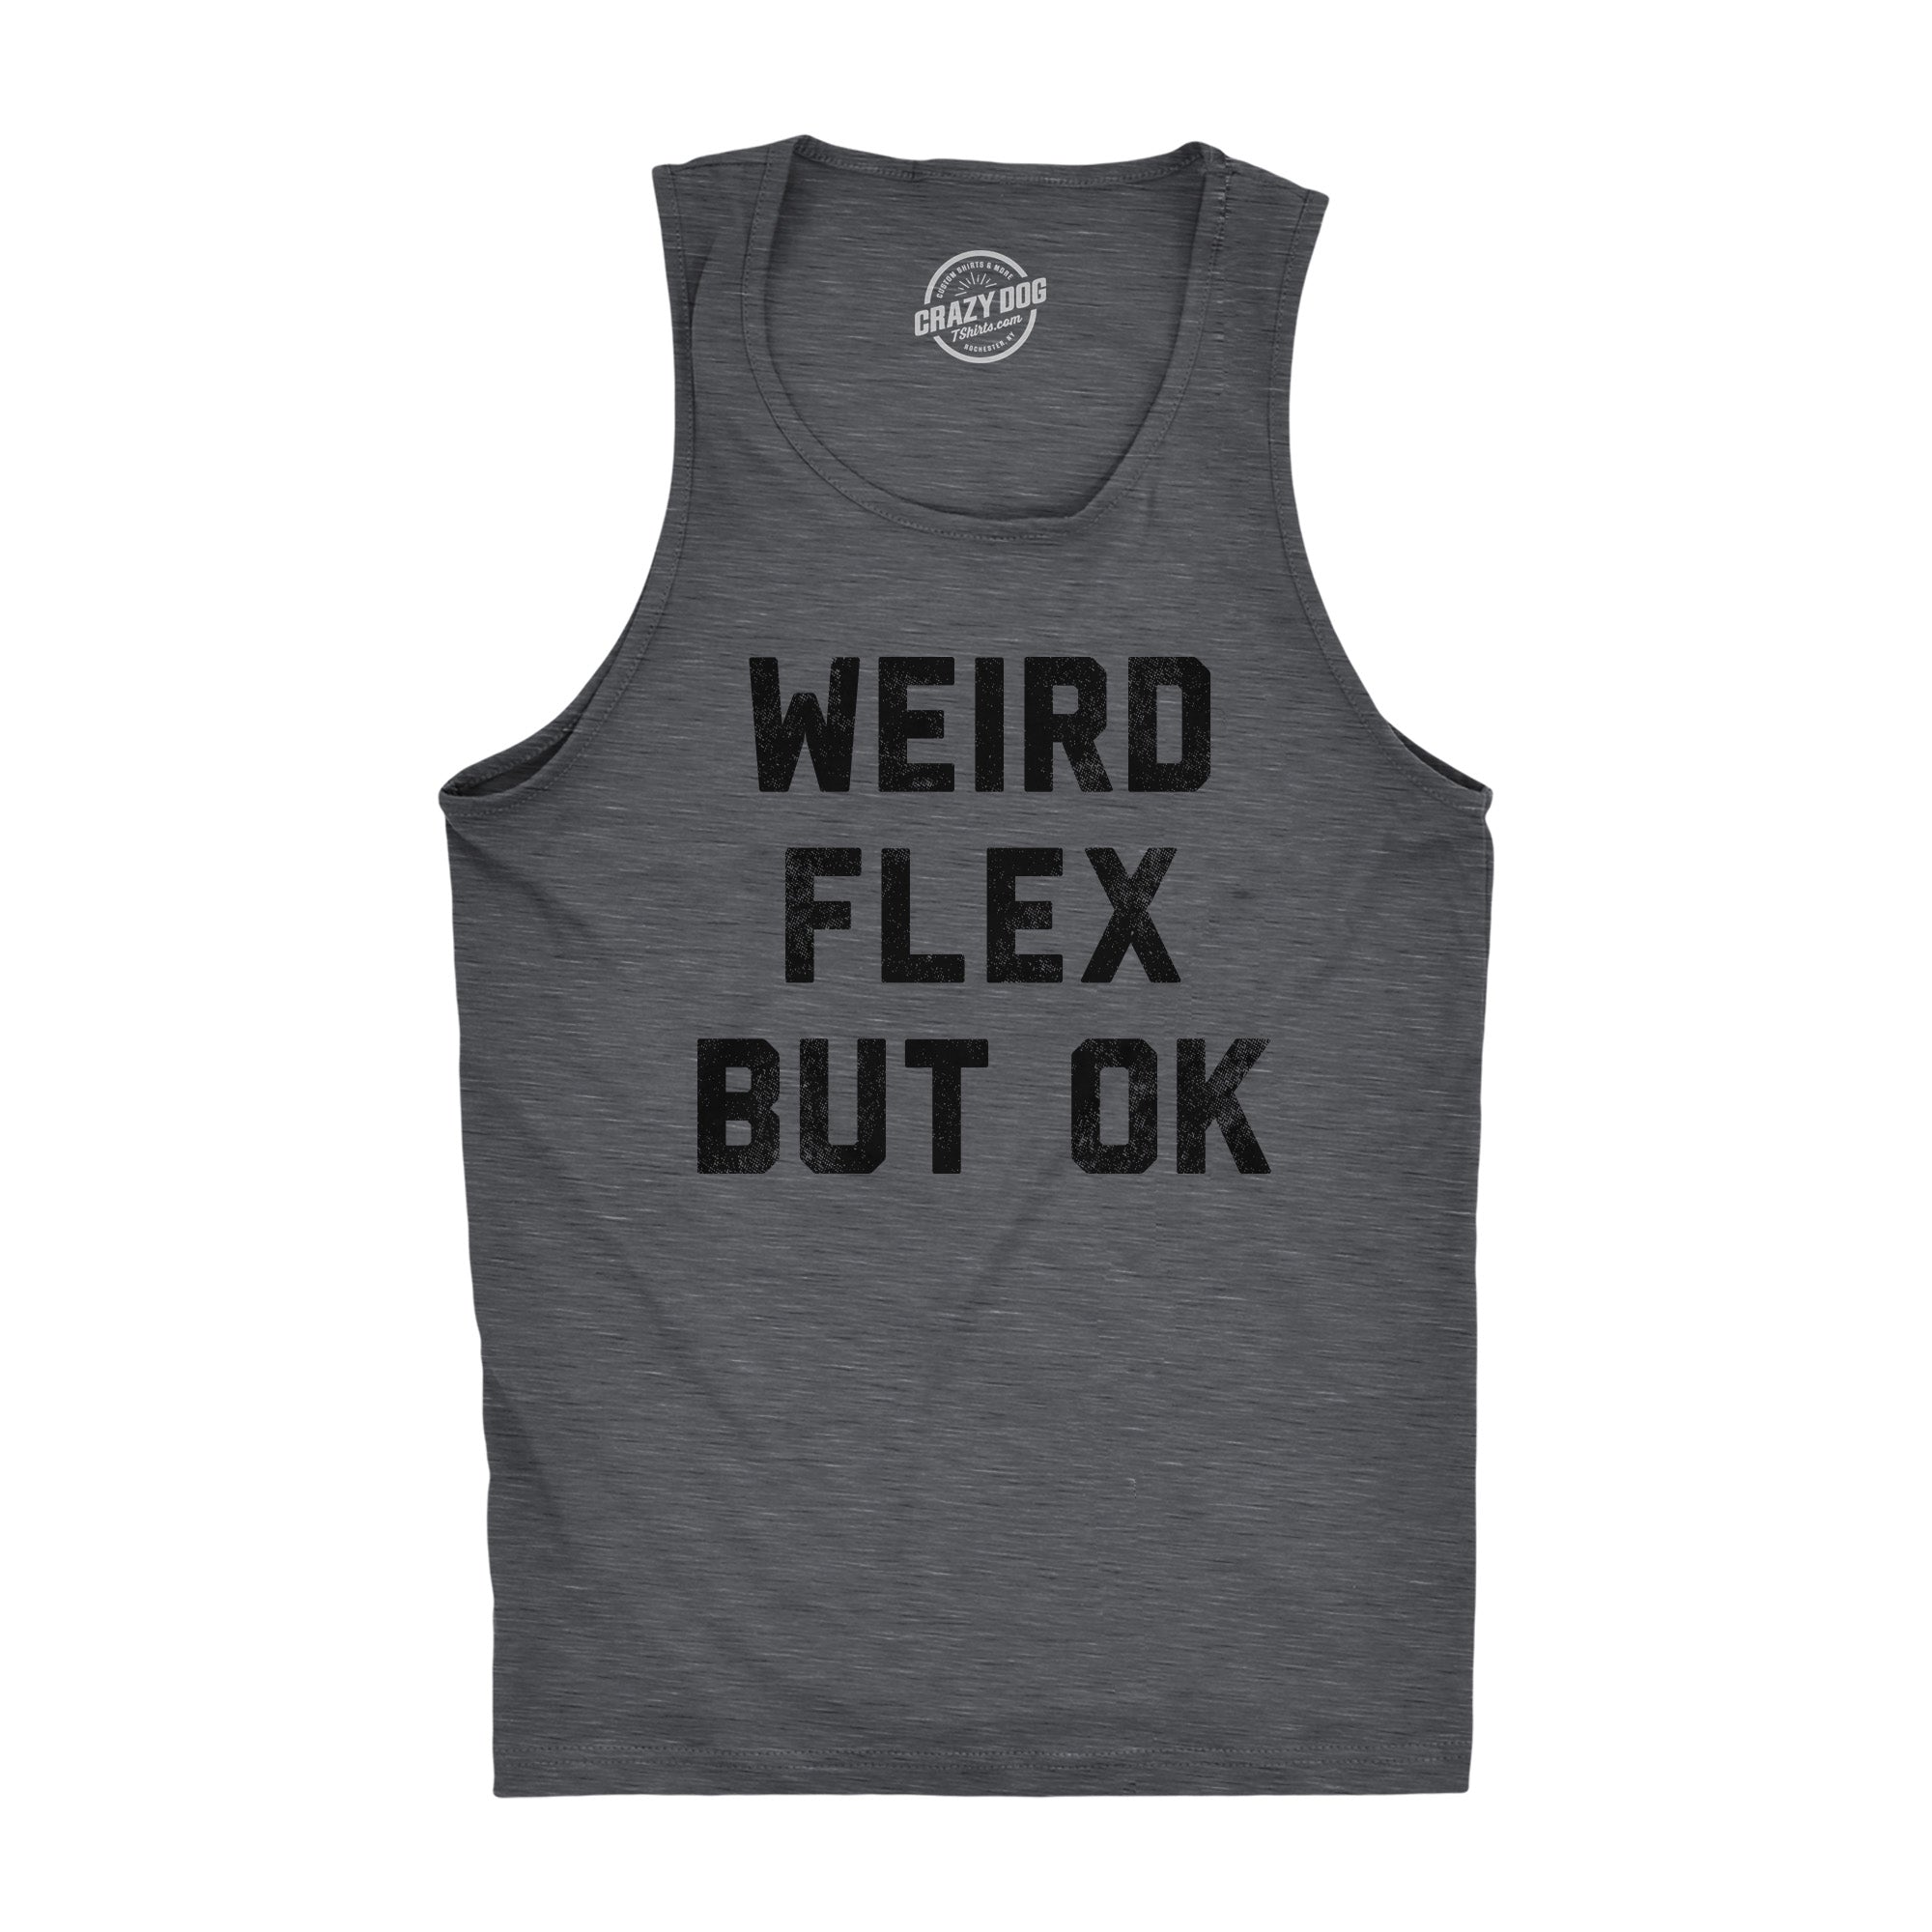 Funny Dark Heather Grey - Weird Flex But Ok Weird Flex But Ok Mens Tank Top Nerdy Fitness sarcastic Tee